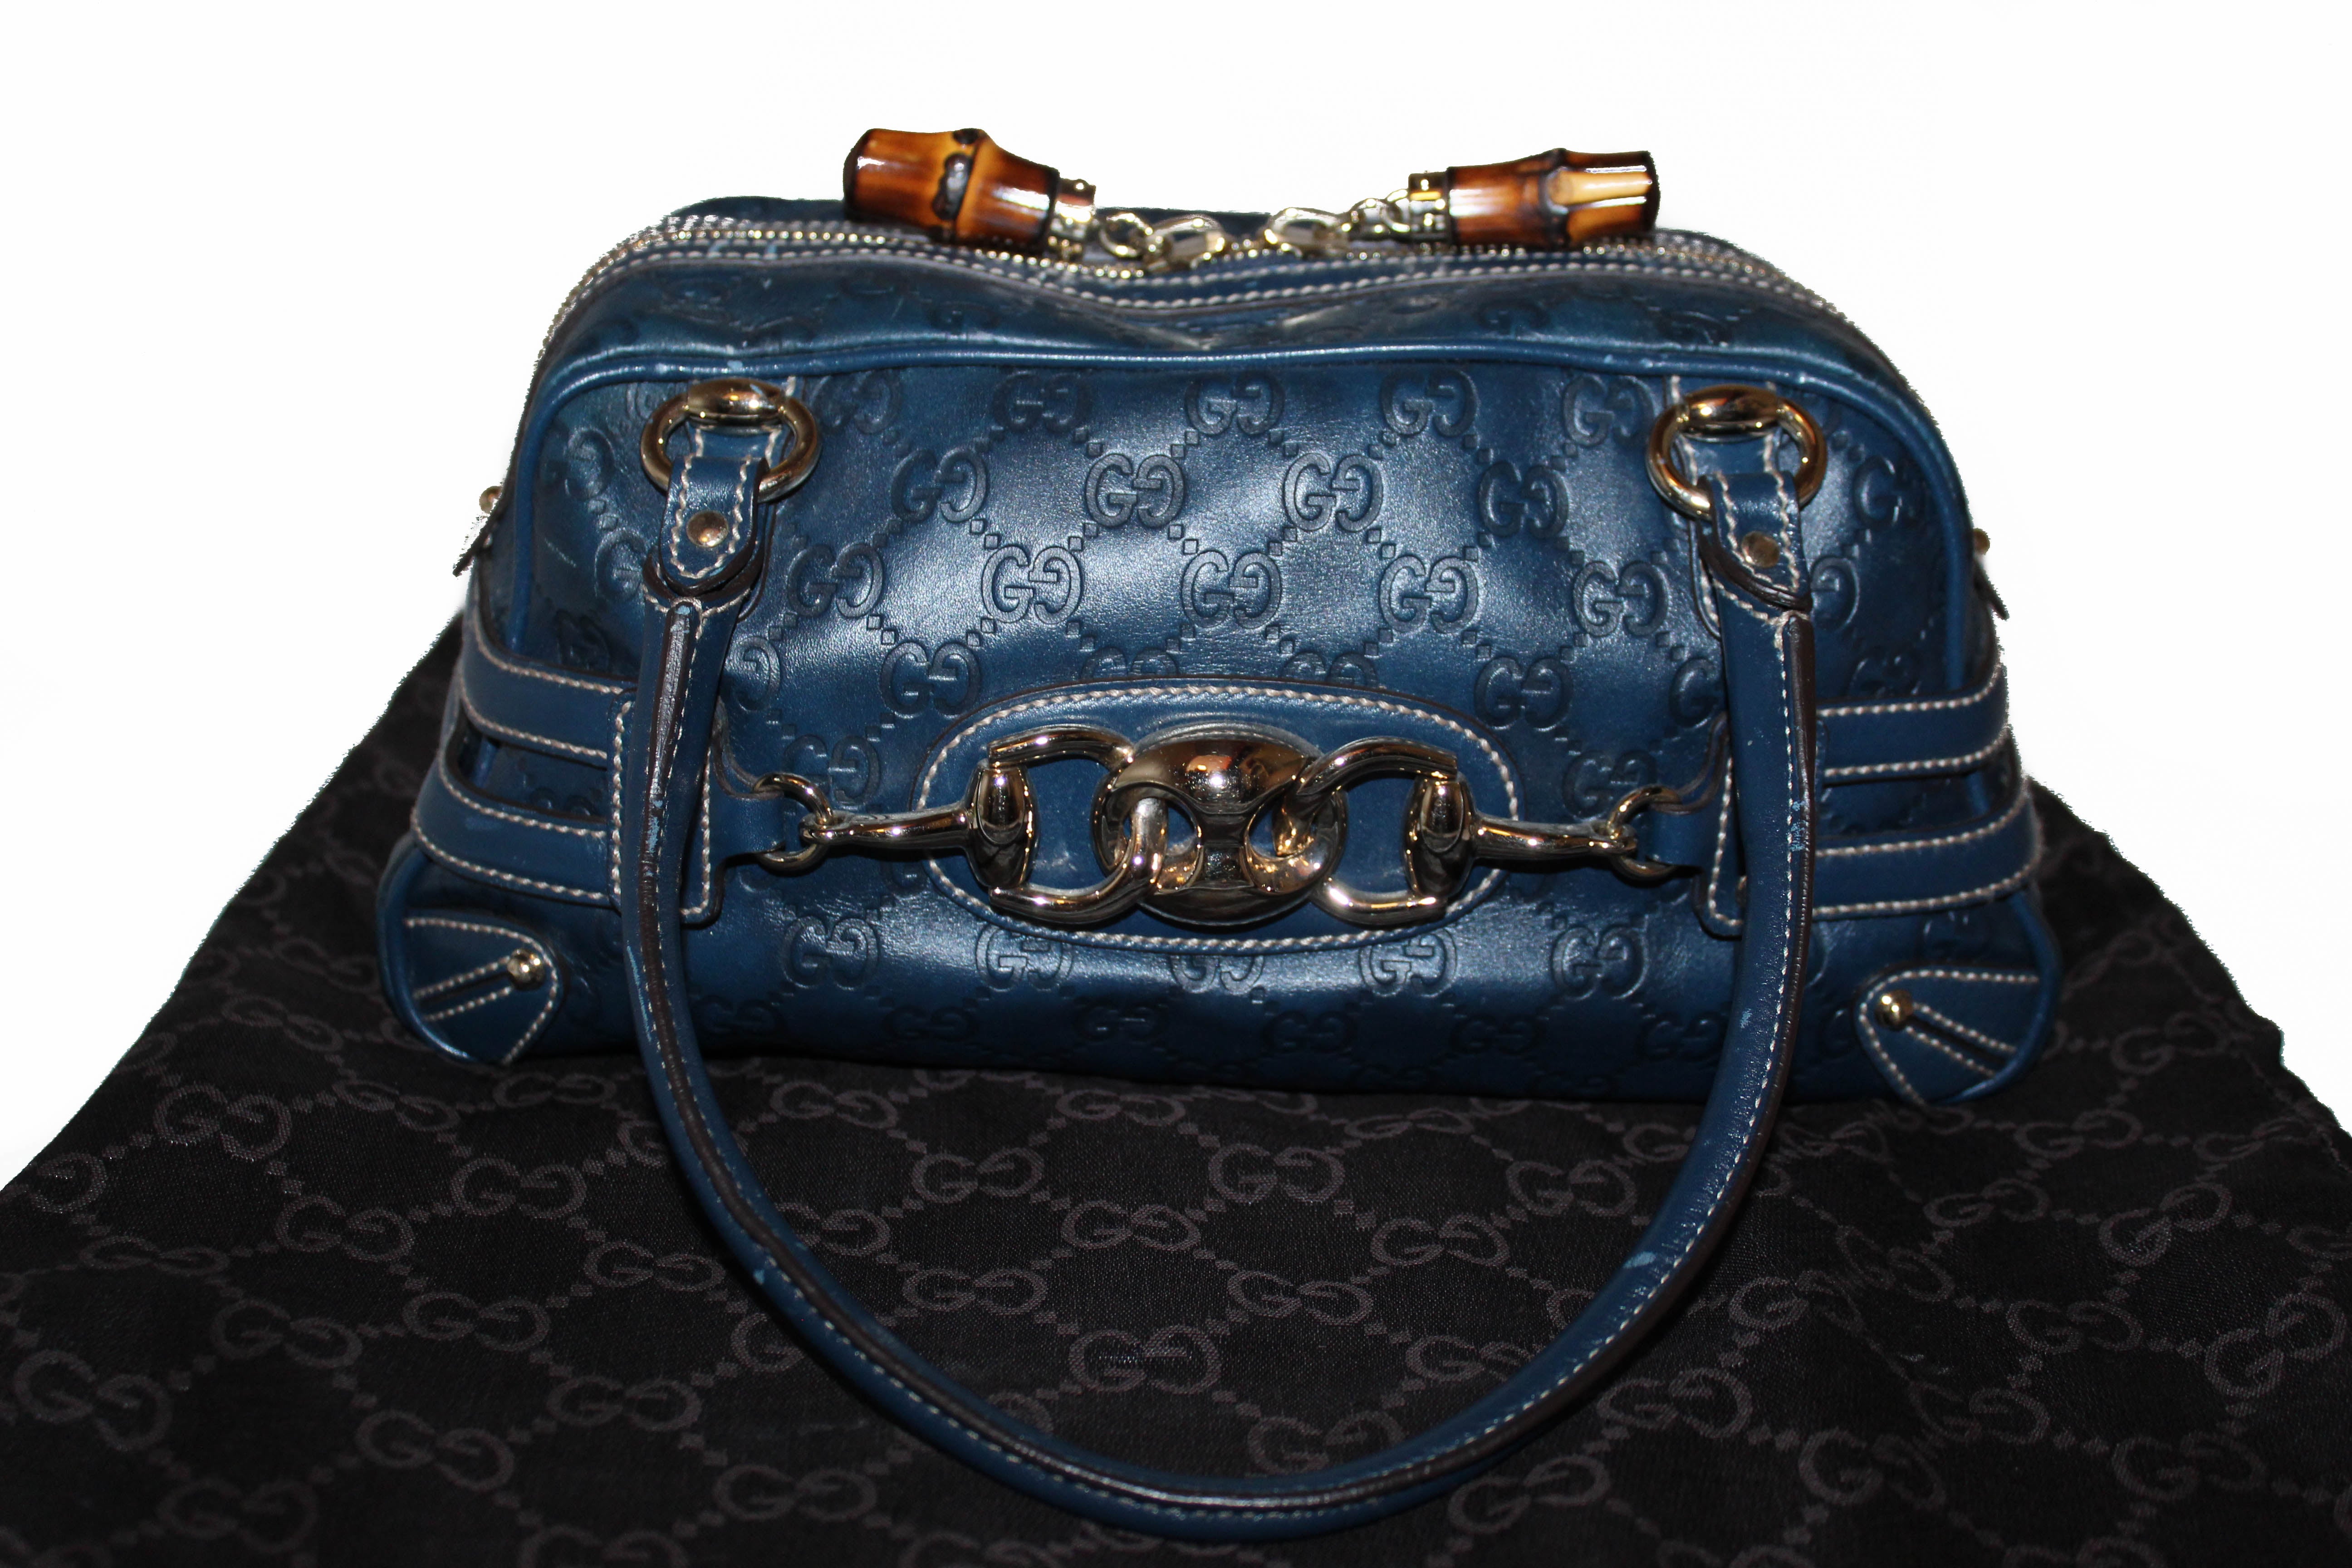 SALE ! Gucci vintage navy blue boston bag doctor bag satchel purse